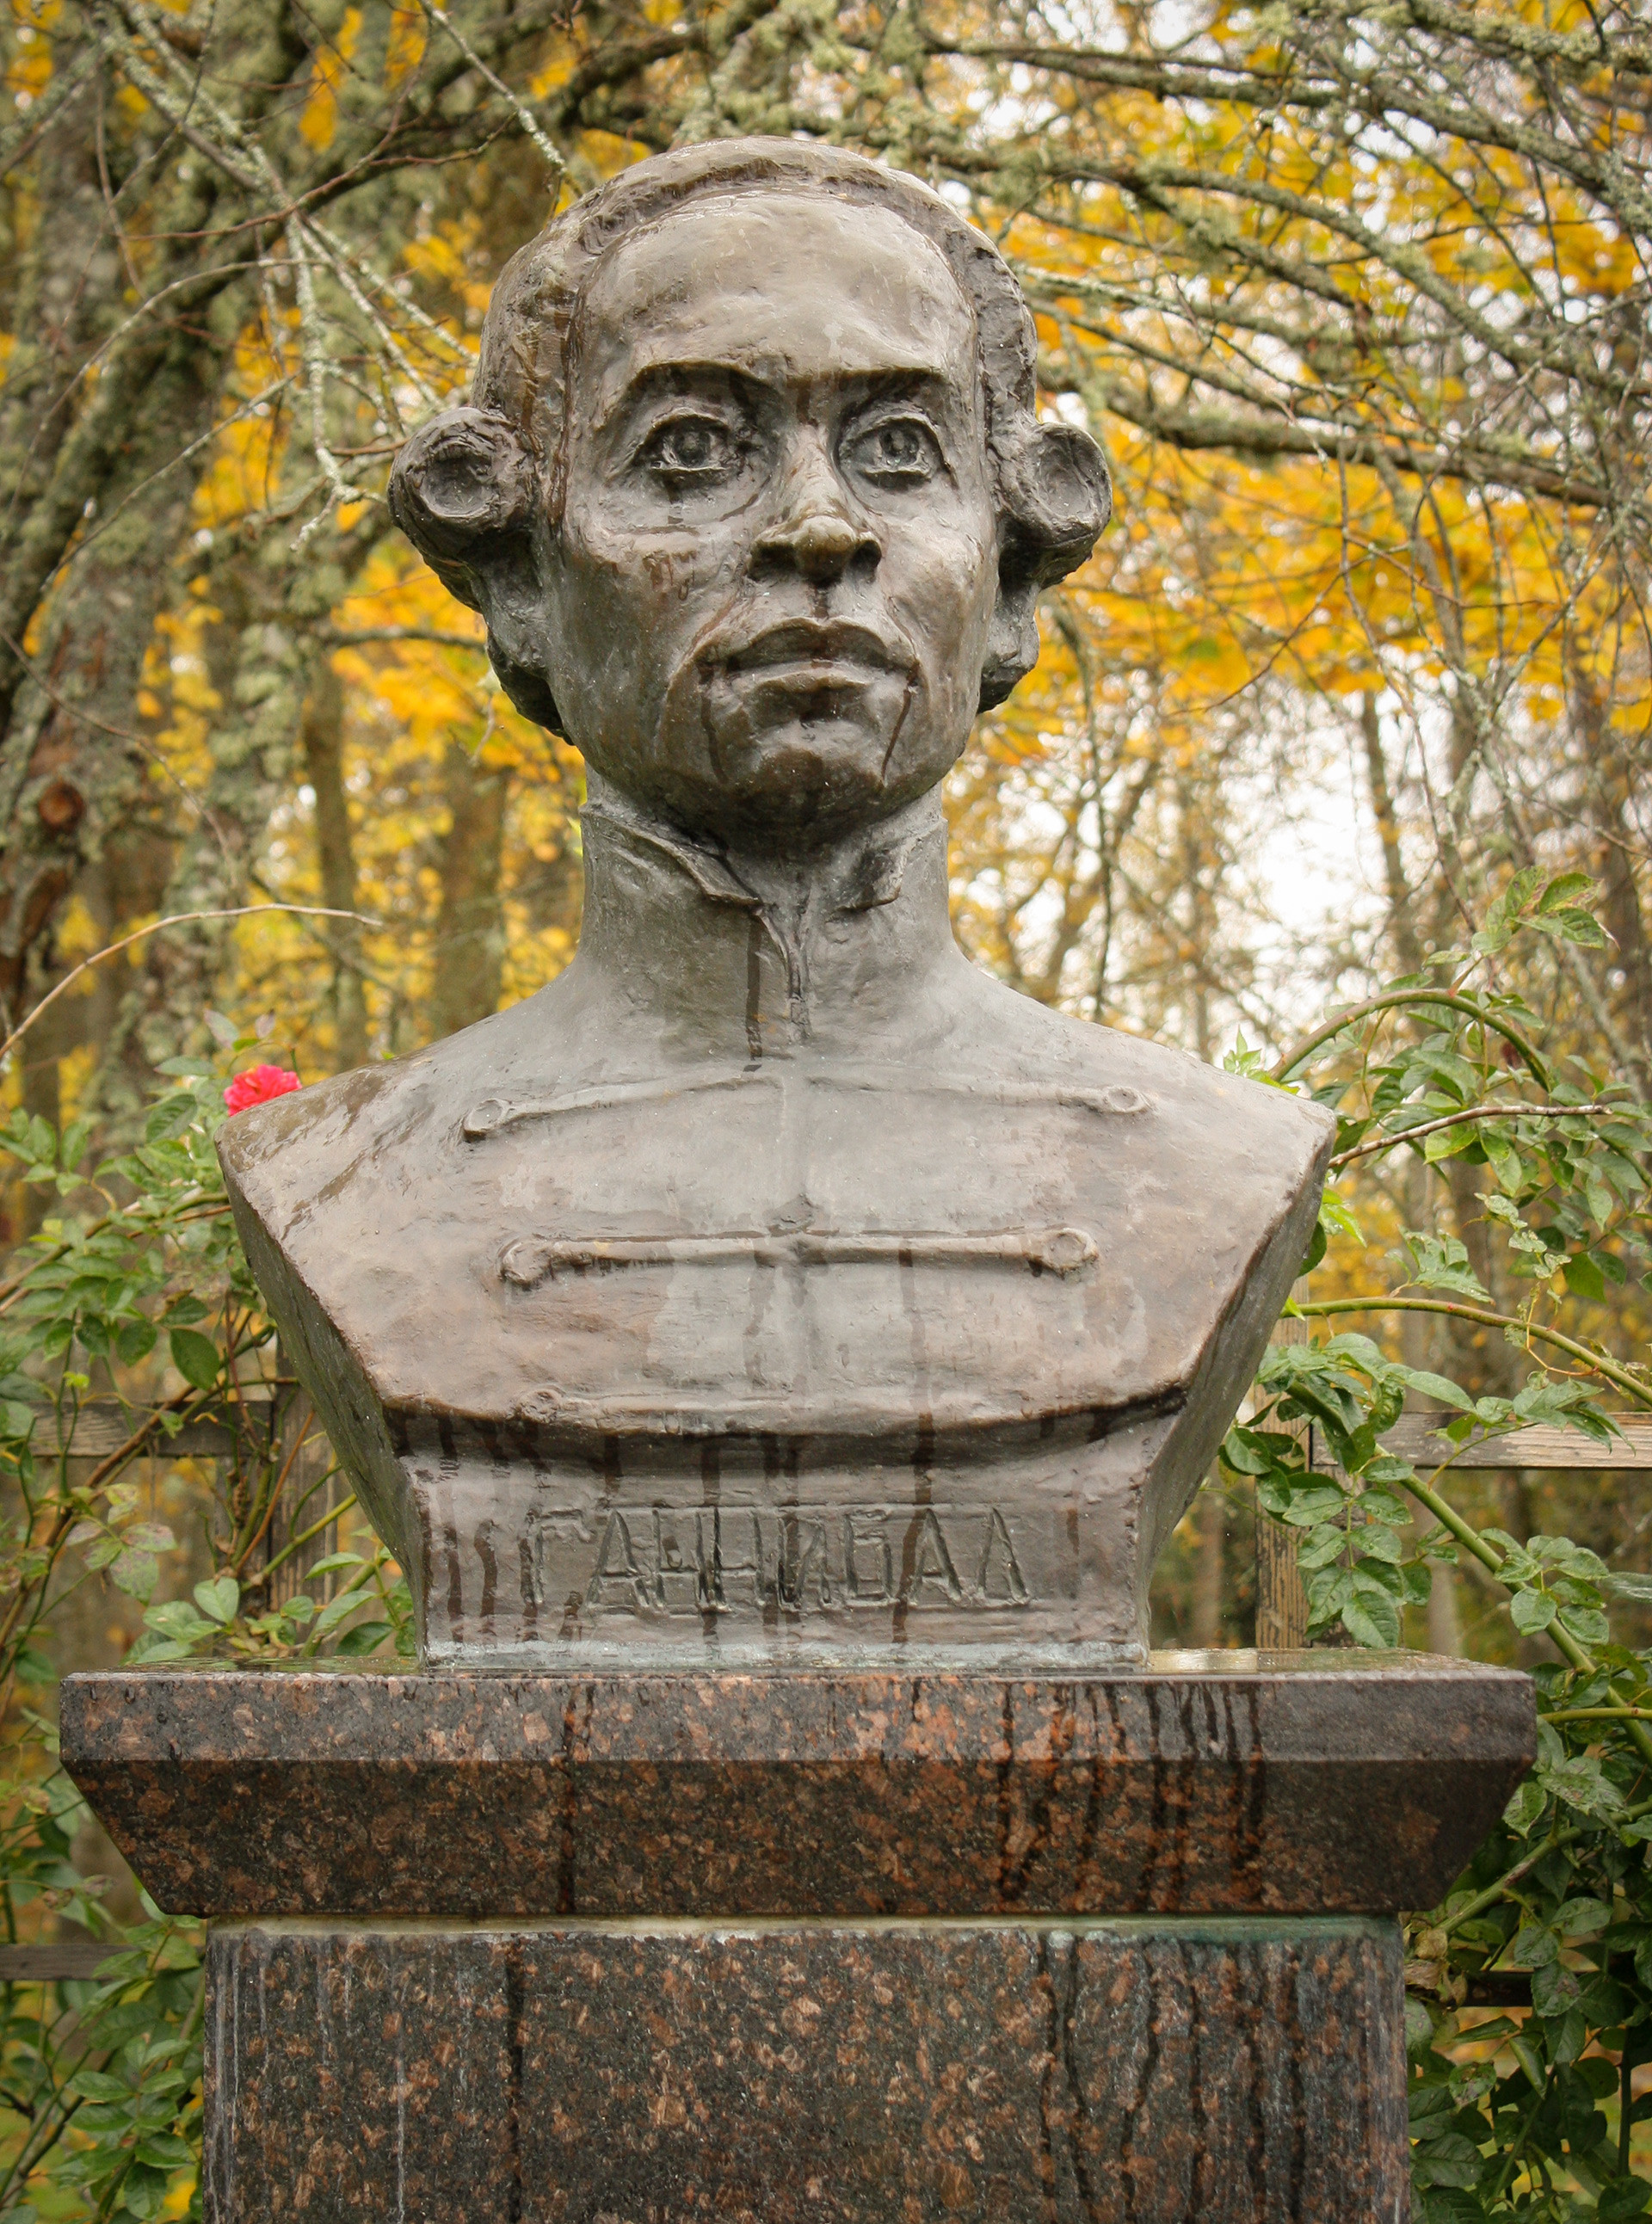 Abram Hannibal's monument in the Petrovskoye village, Pskov Region, Russia.